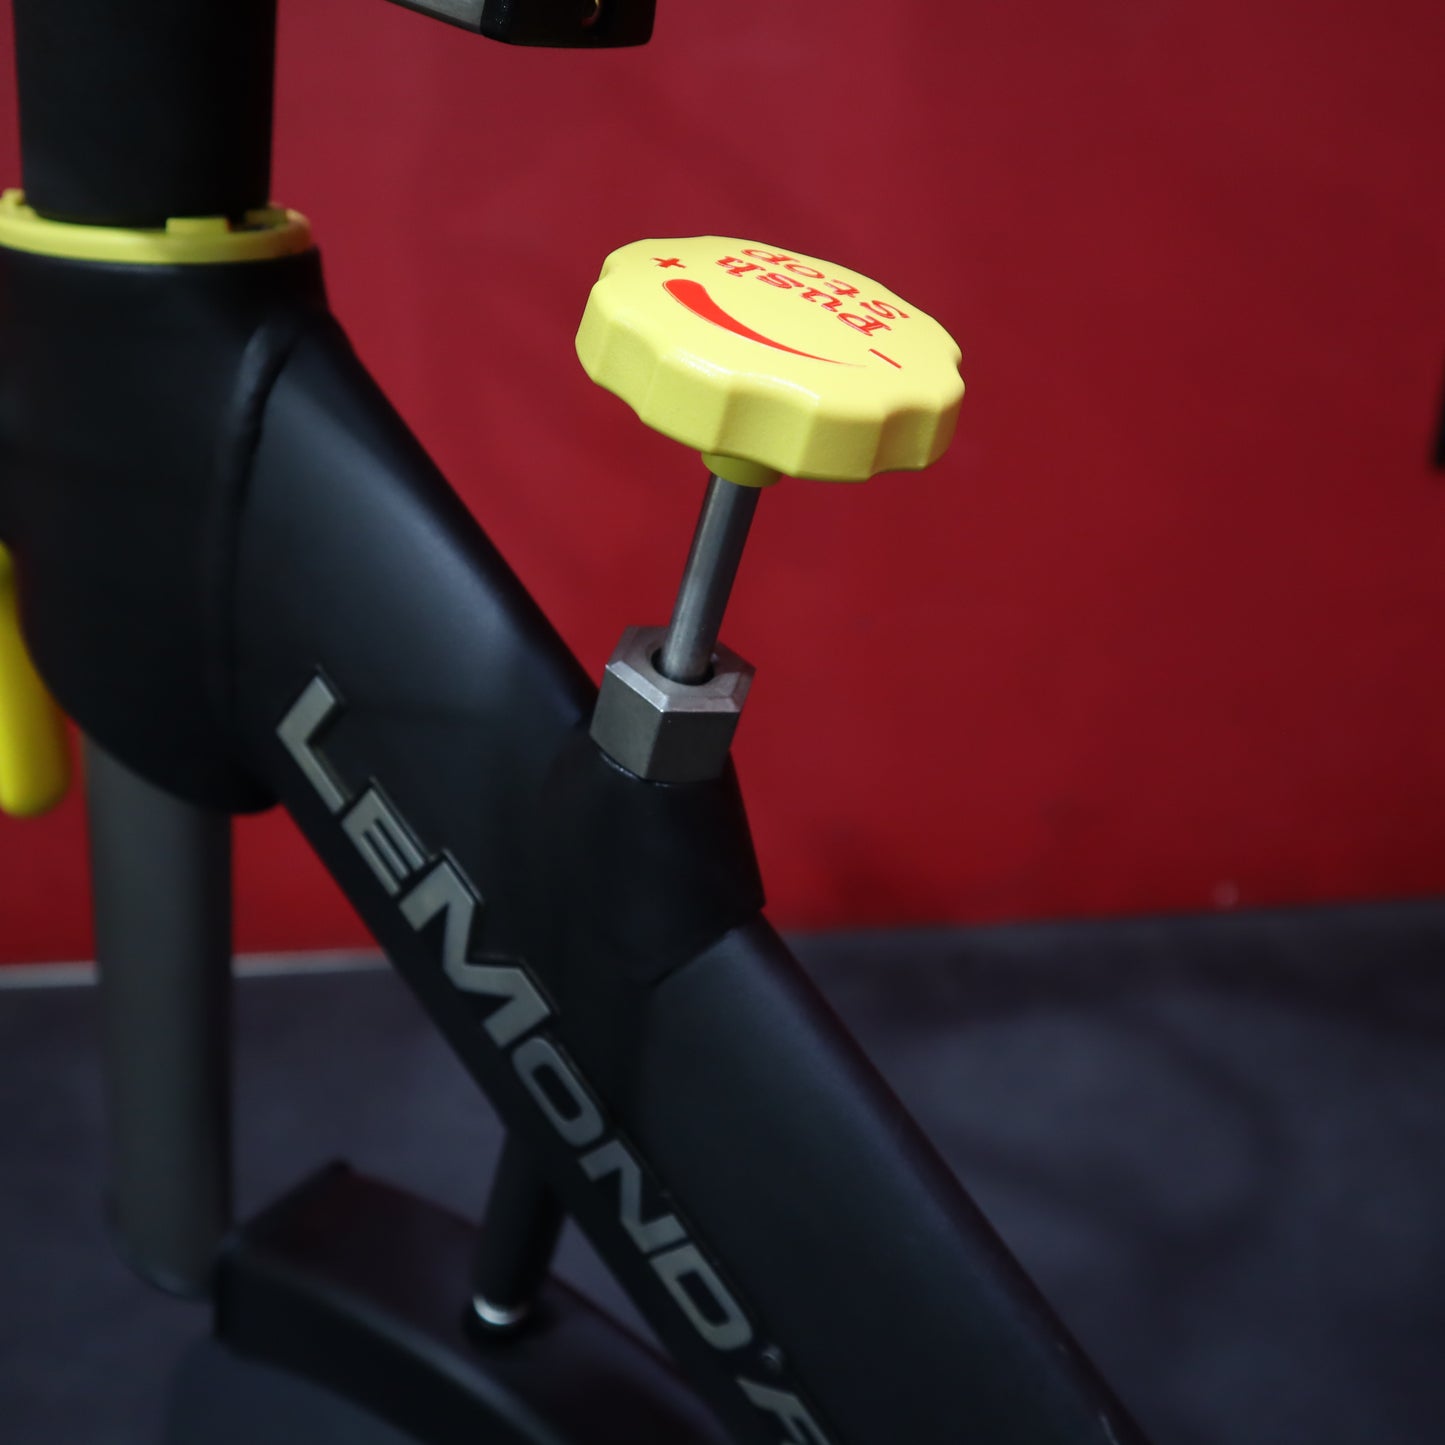 Lemond L-15300 Revmaster Pro Cycling Bike (Refurbished)